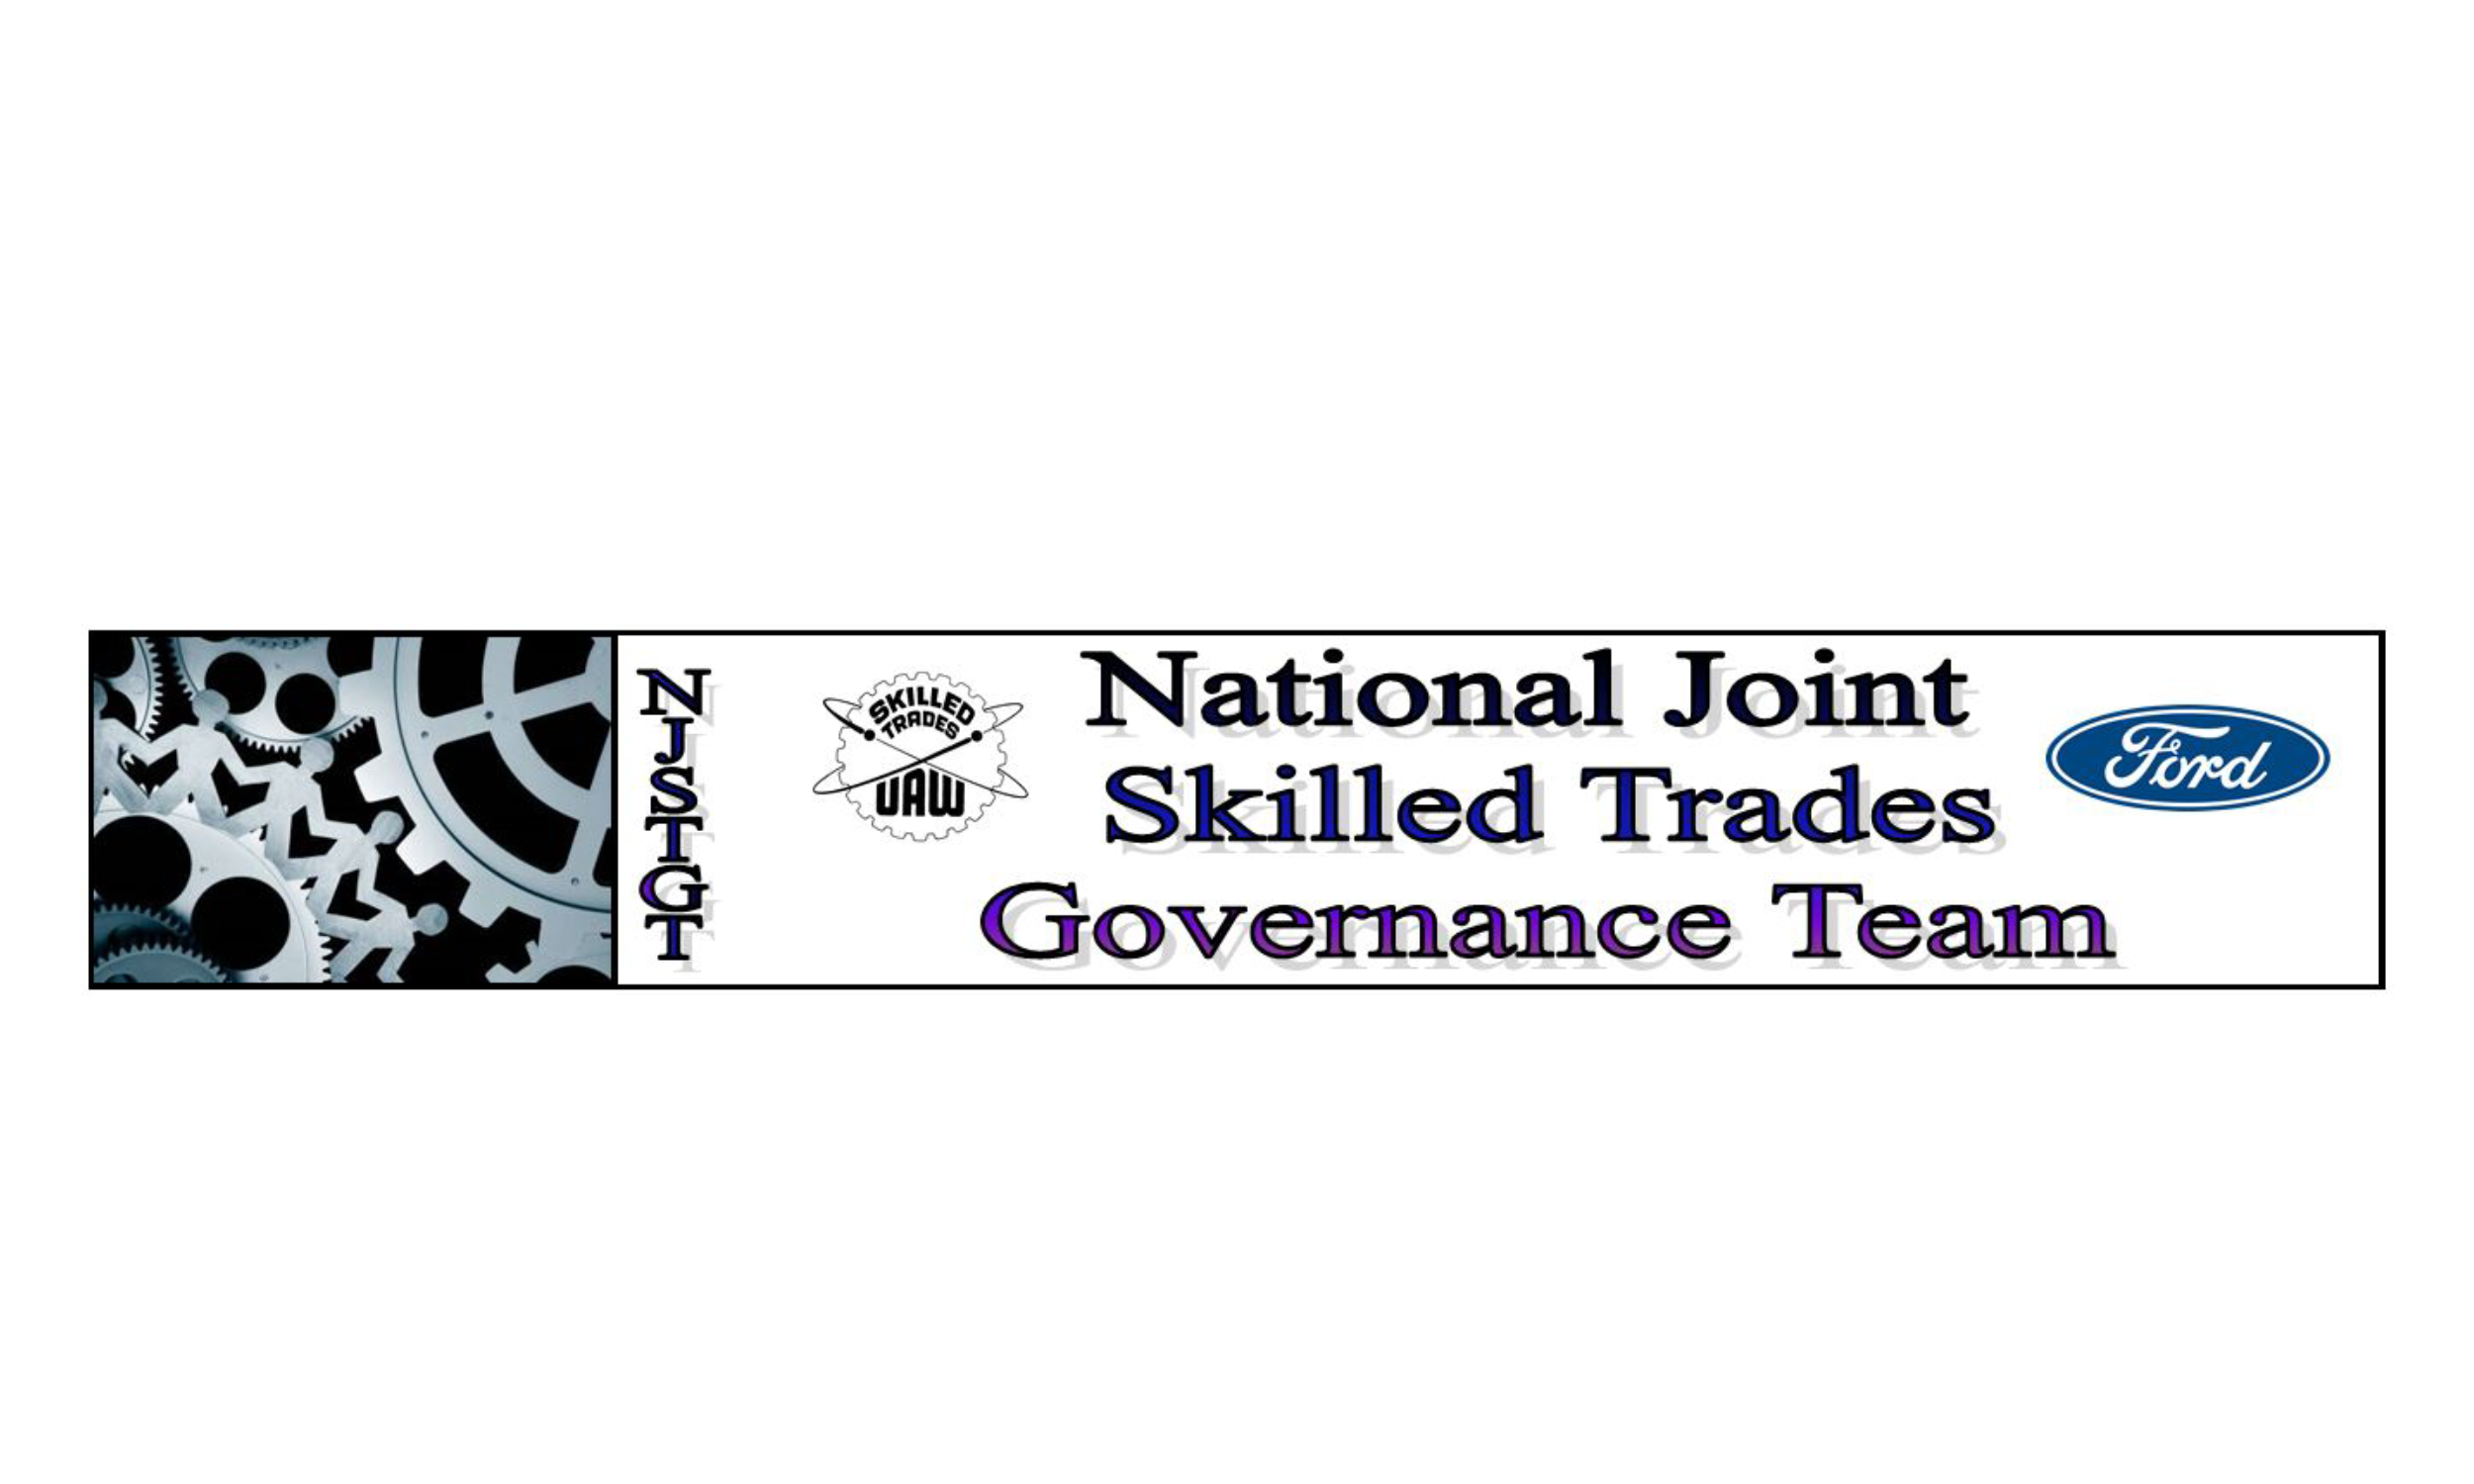 National Joint Skilled Trades Governance Team (SKILLED TRADES)